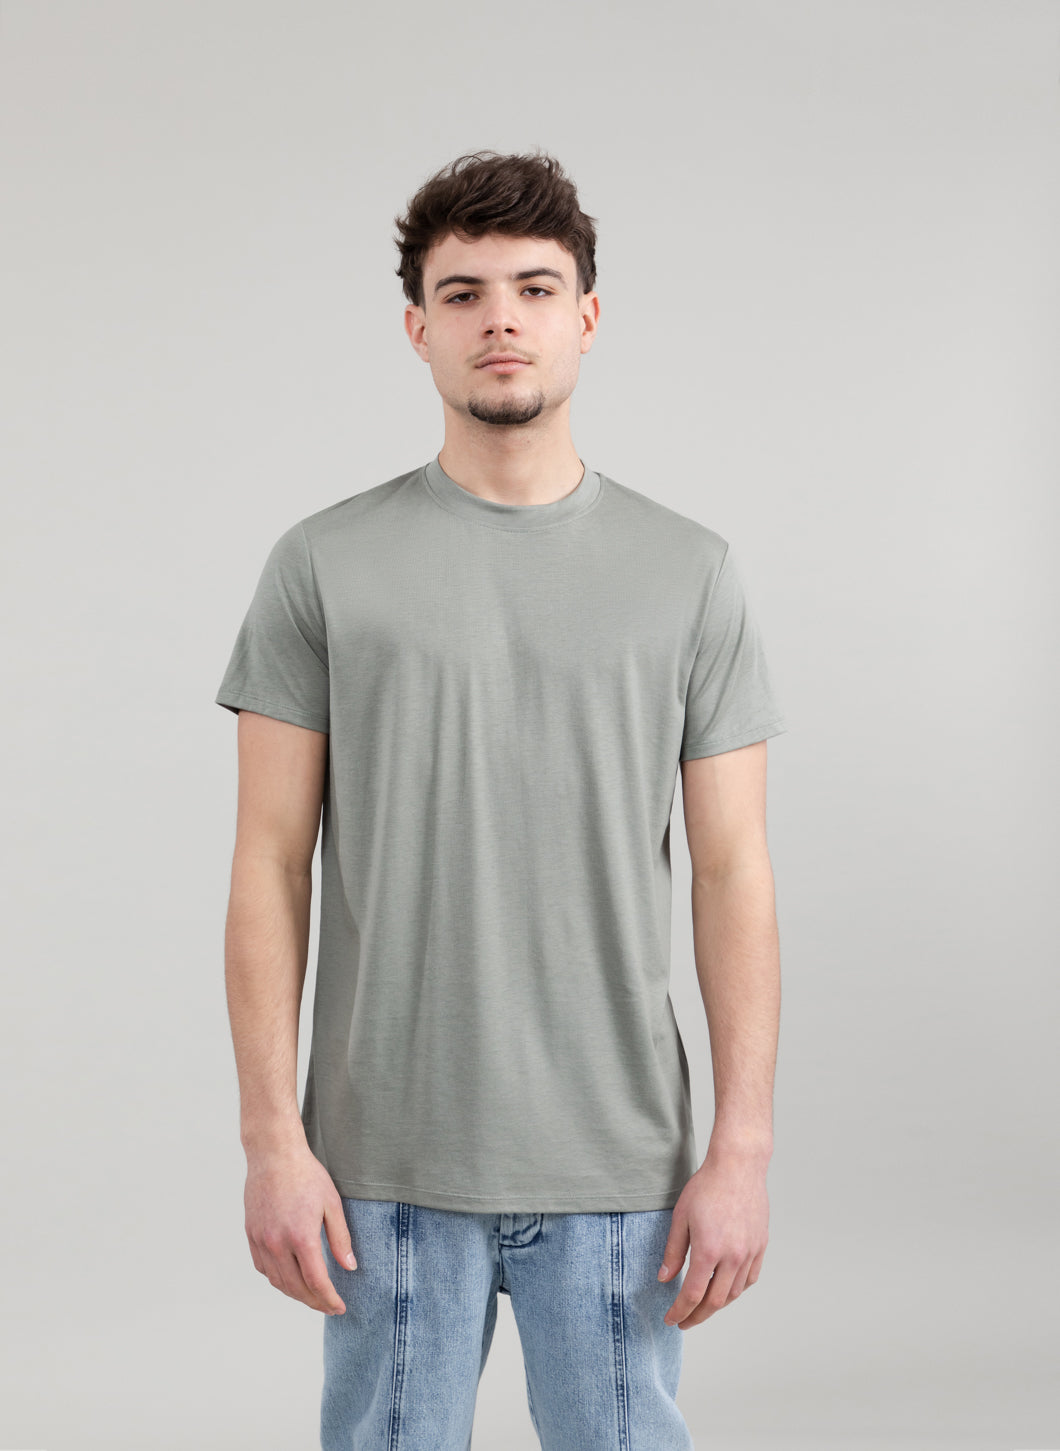 Short Sleeve T-Shirt in Clay Eucalyptus & Cotton